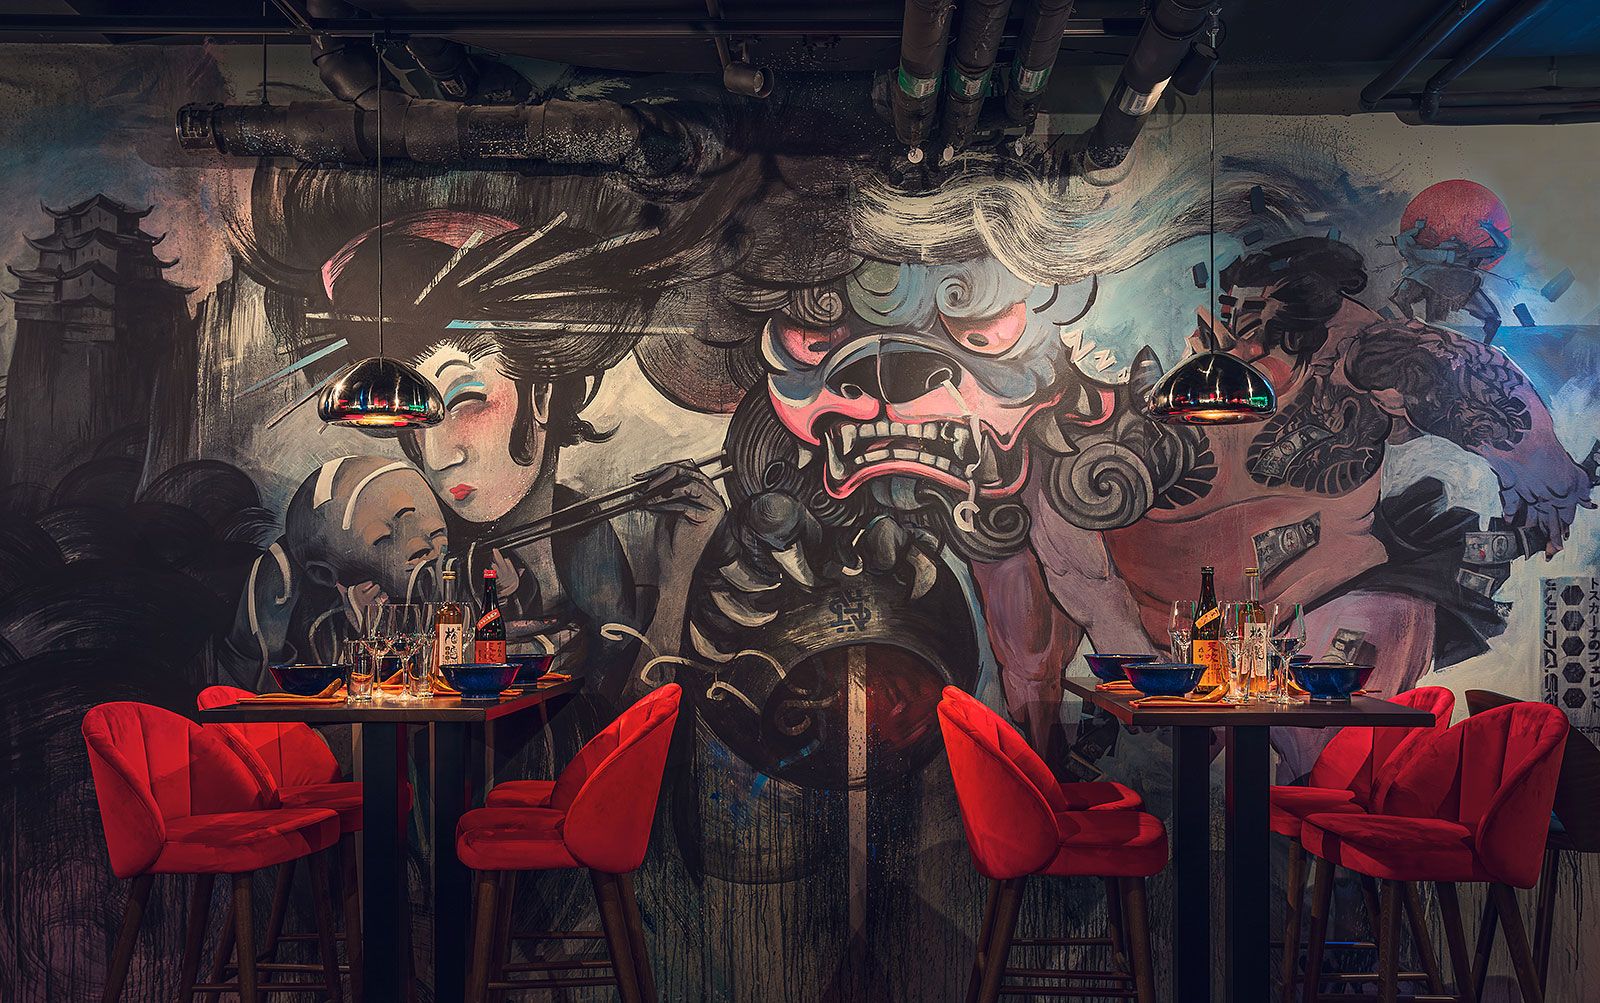 Sin Ramen – The hottest restaurants right now